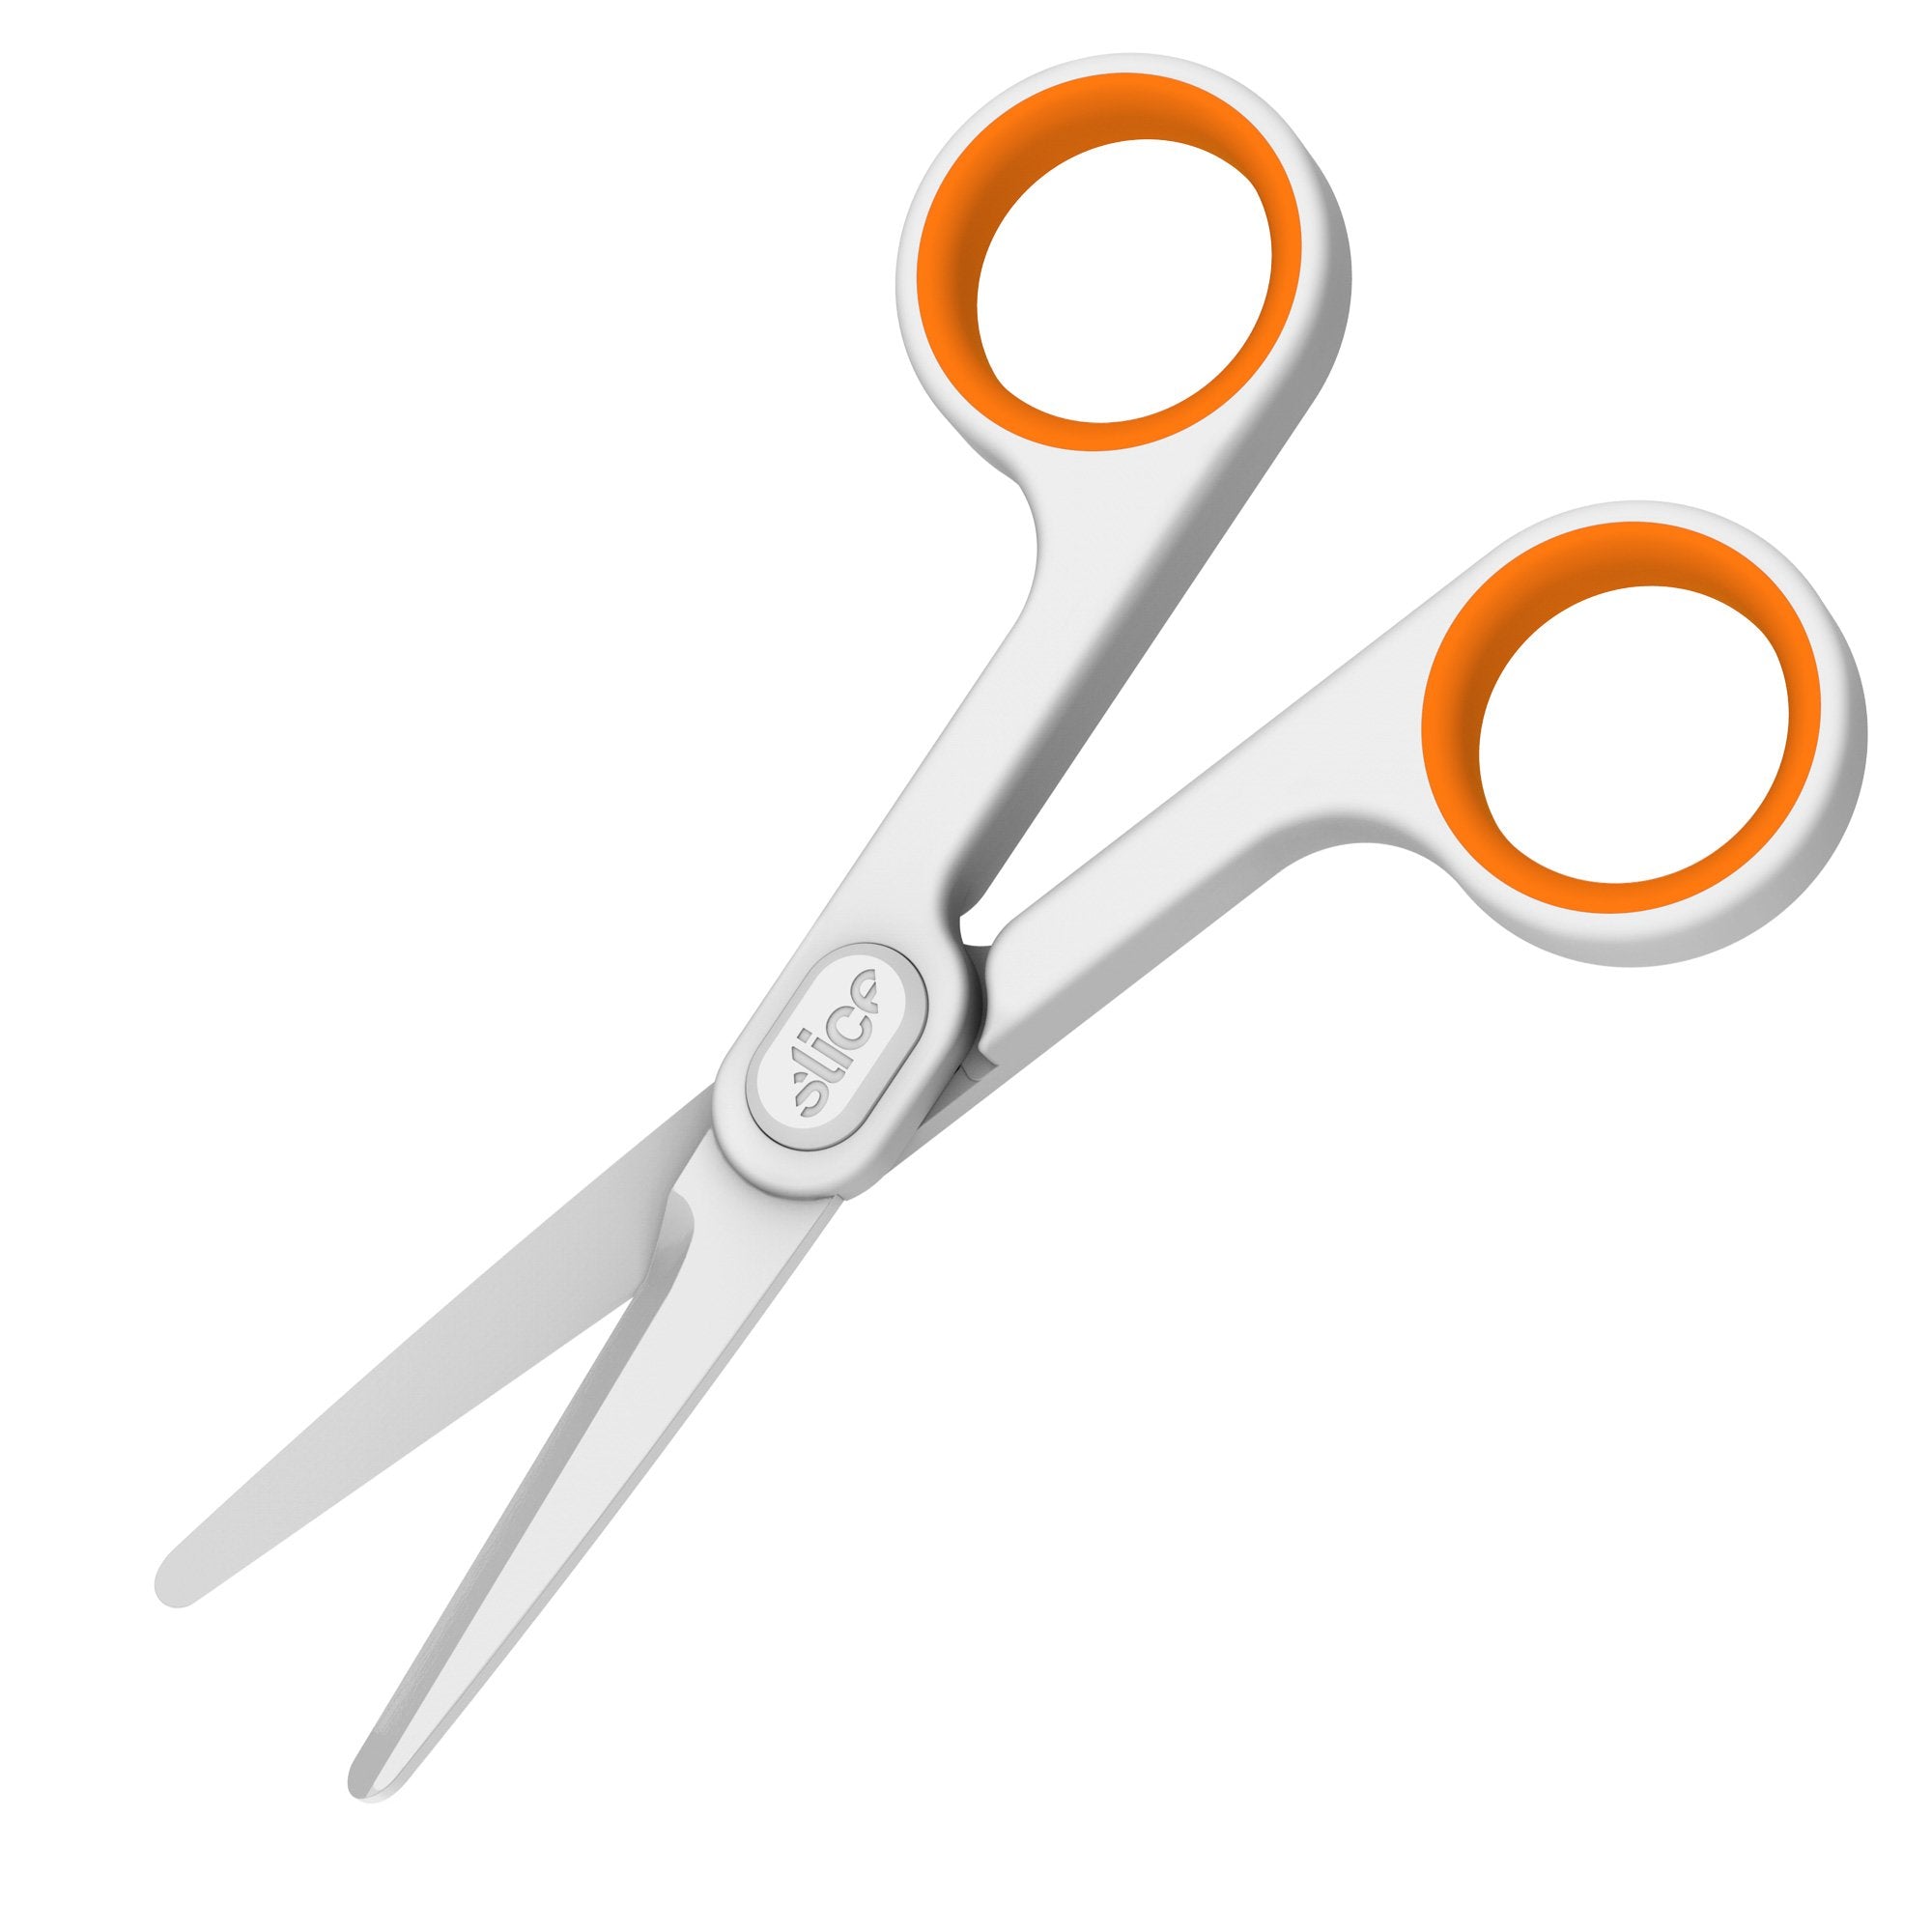 Left-Handed Kinder Scissors - For Small Hands